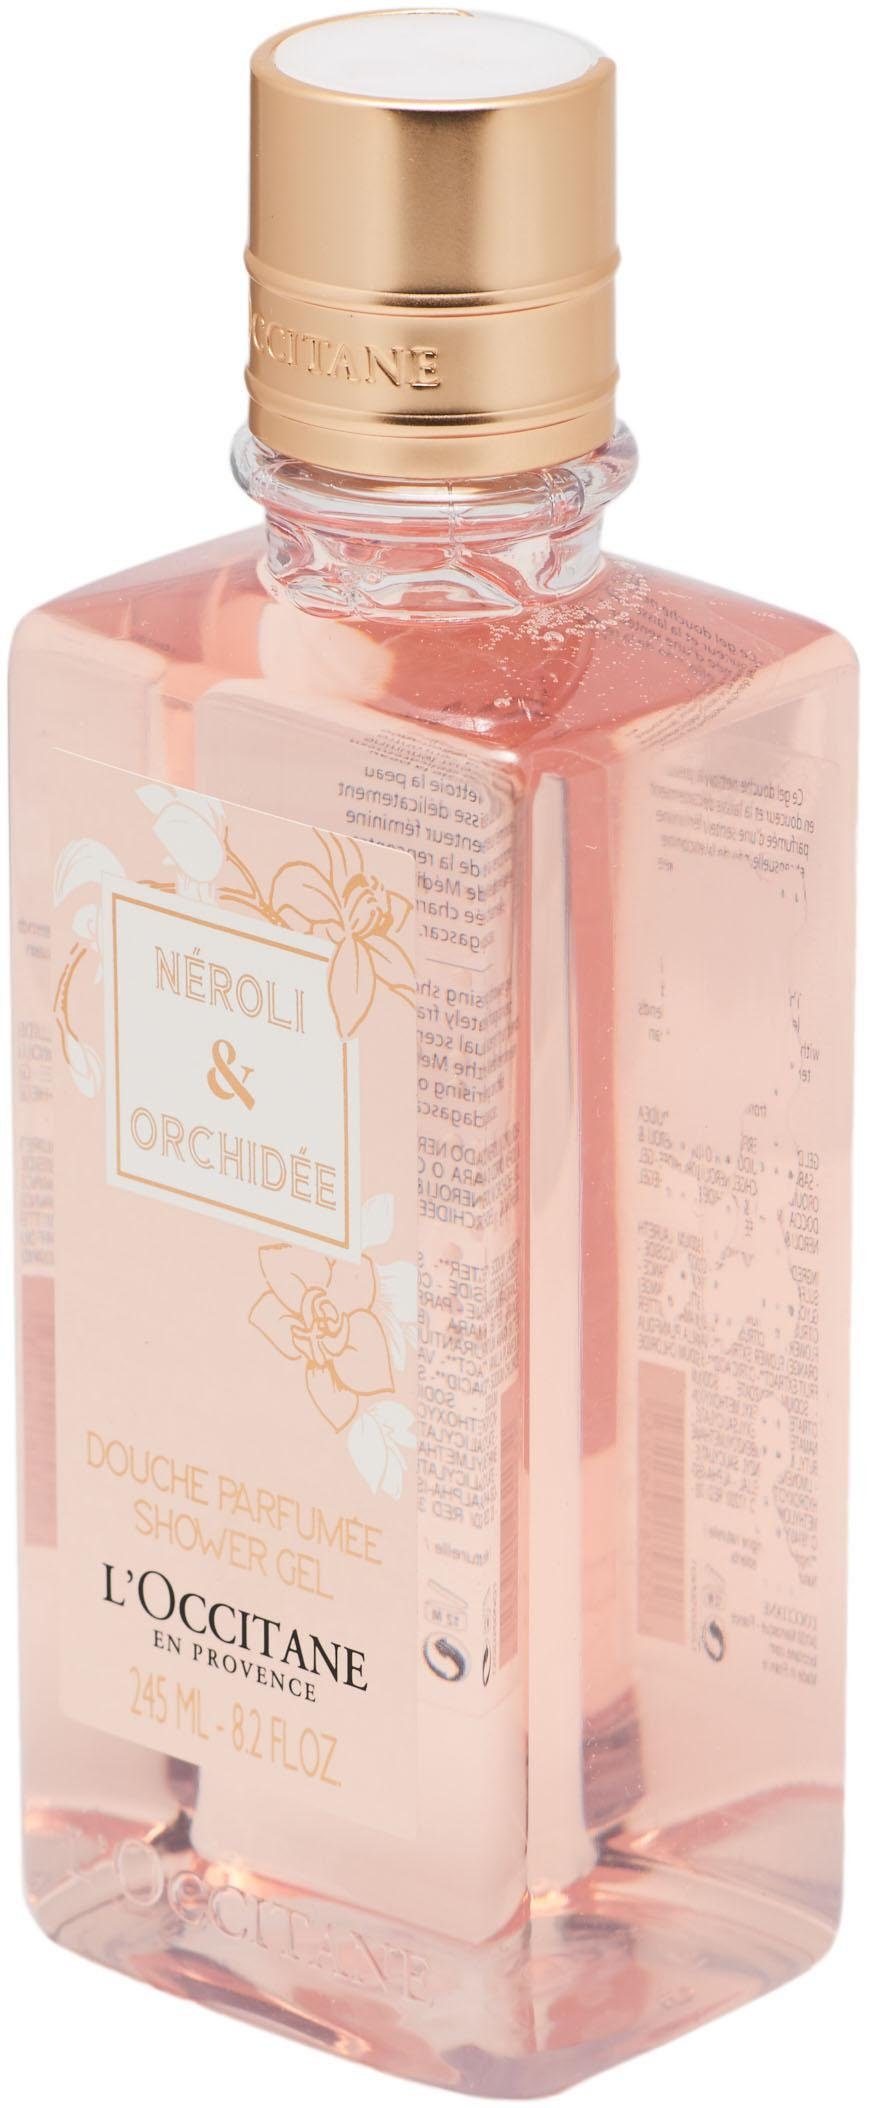 L'OCCITANE Duschgel Néroli & Orchidée Douche Parfumée